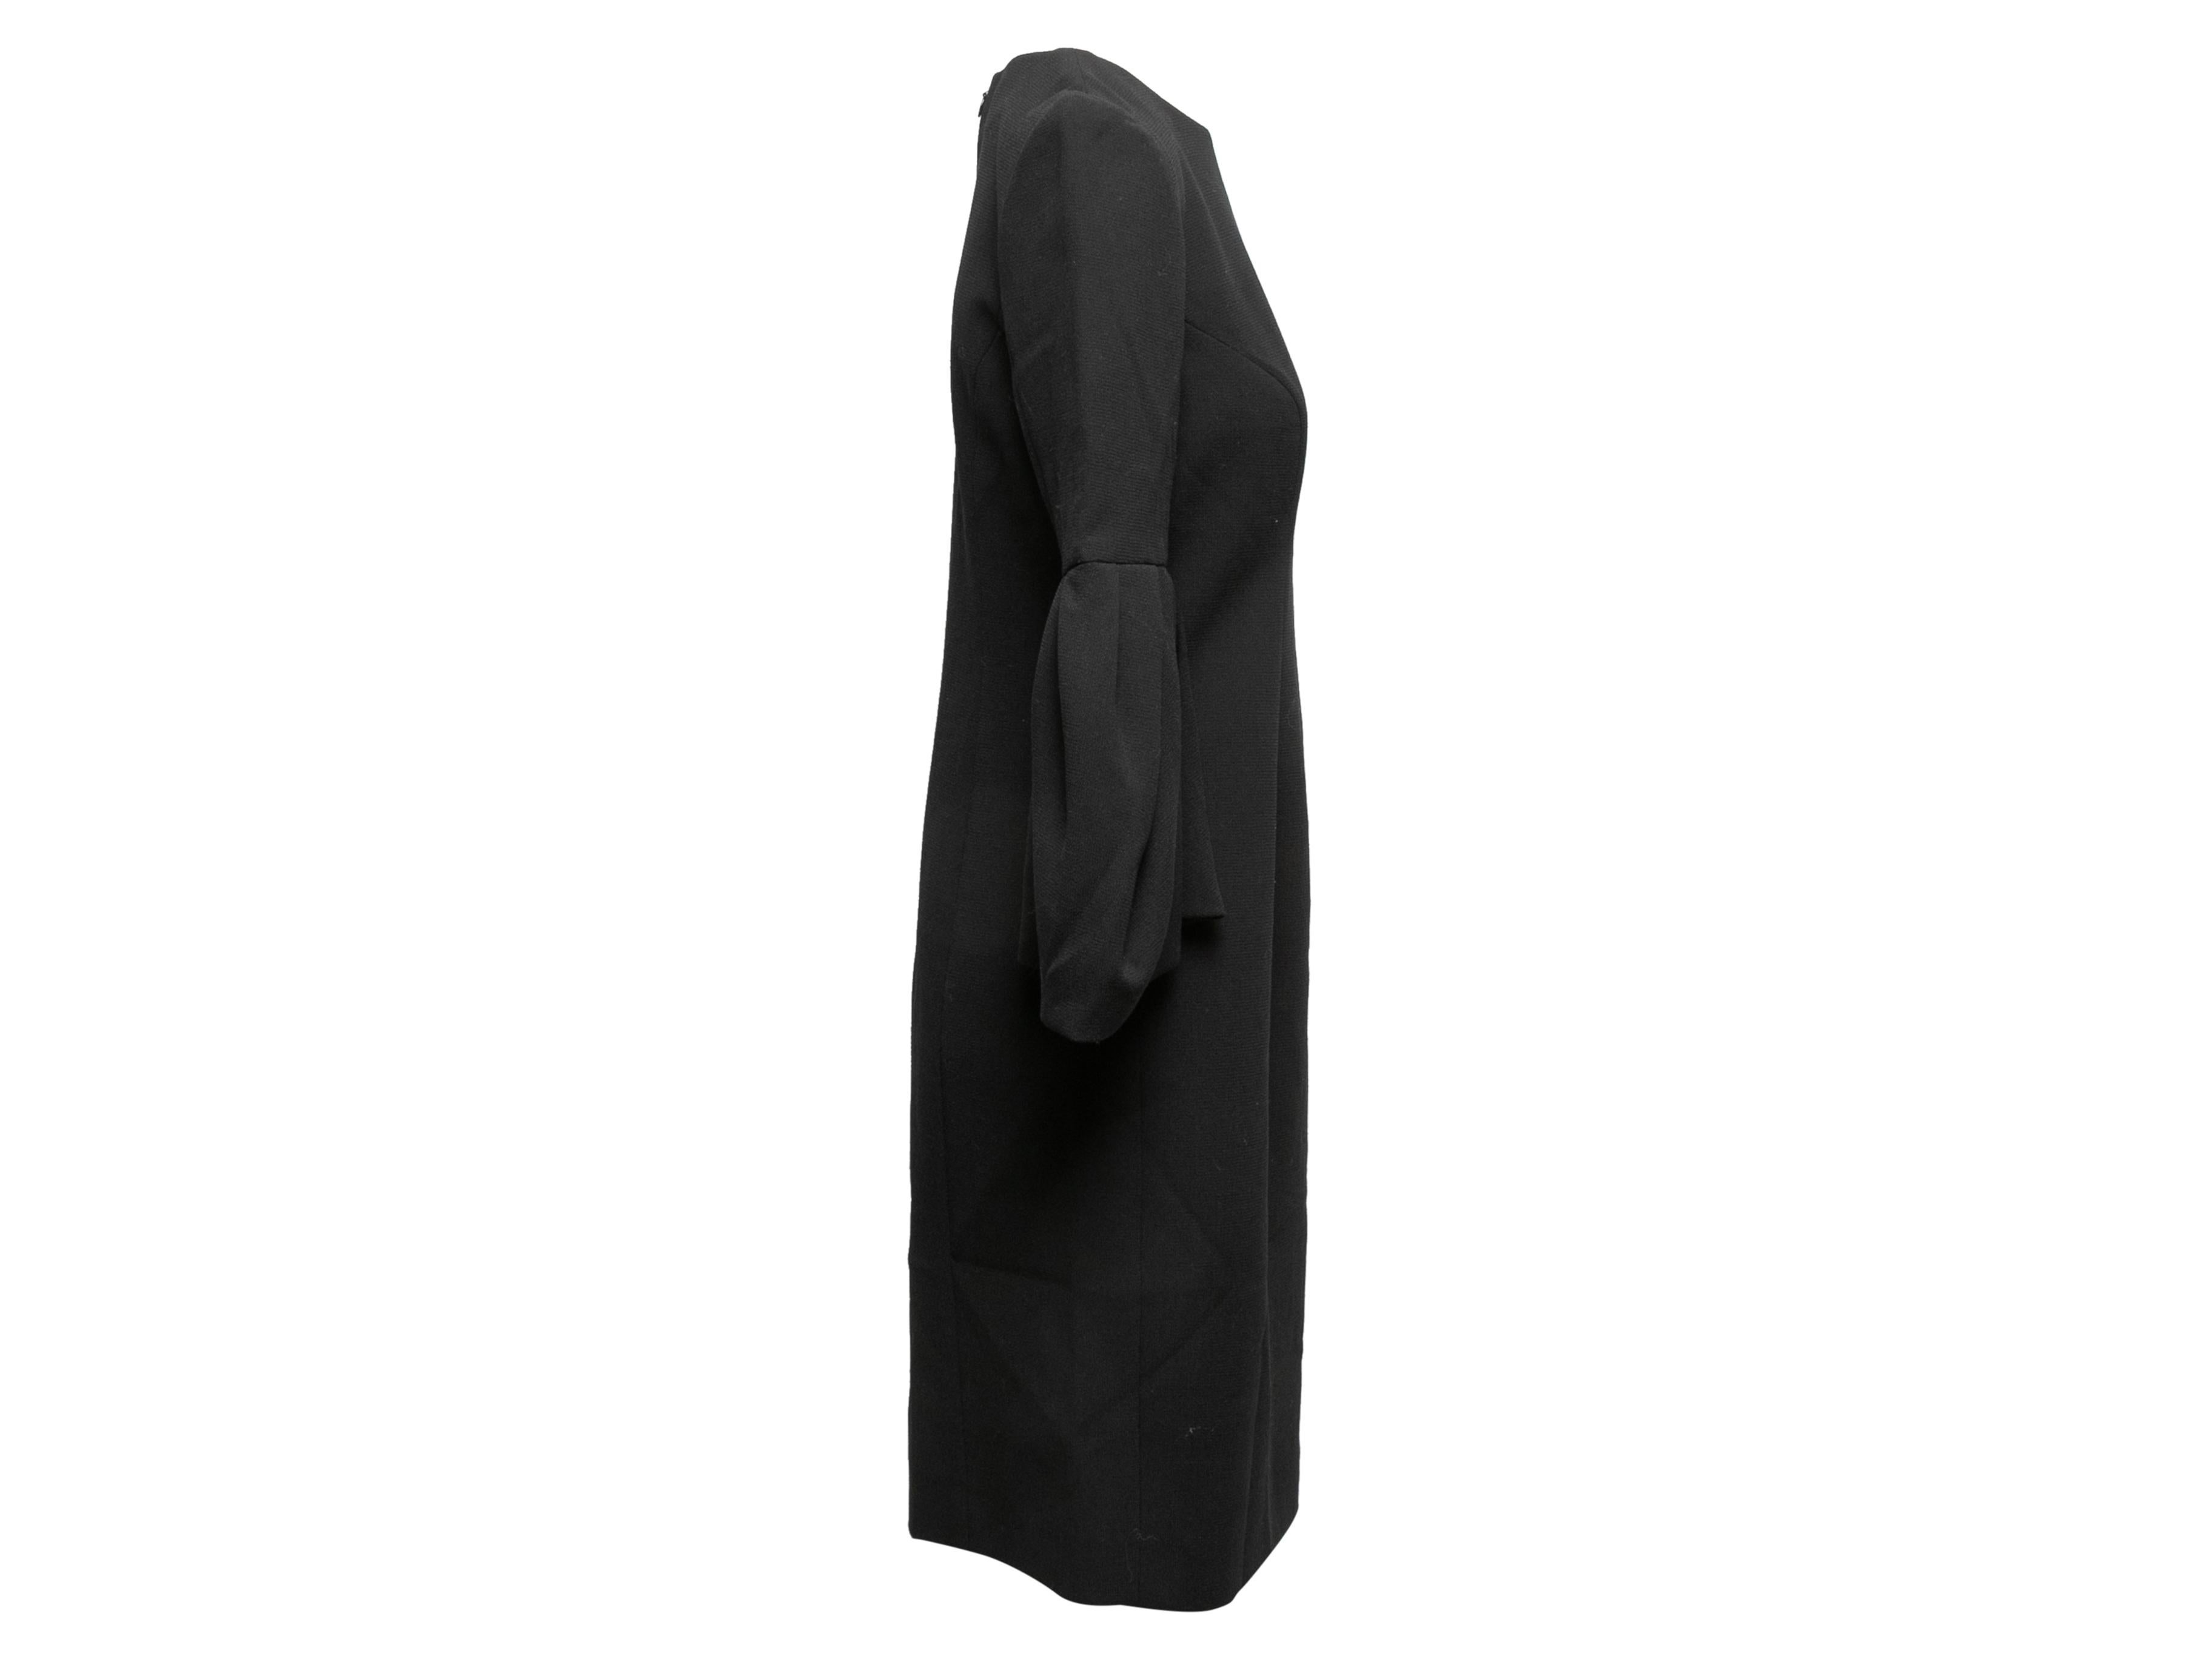 Black virgin wool dress by Carolina Herrera. Crew neck. Long puff sleeves. Zip closure at back. 37